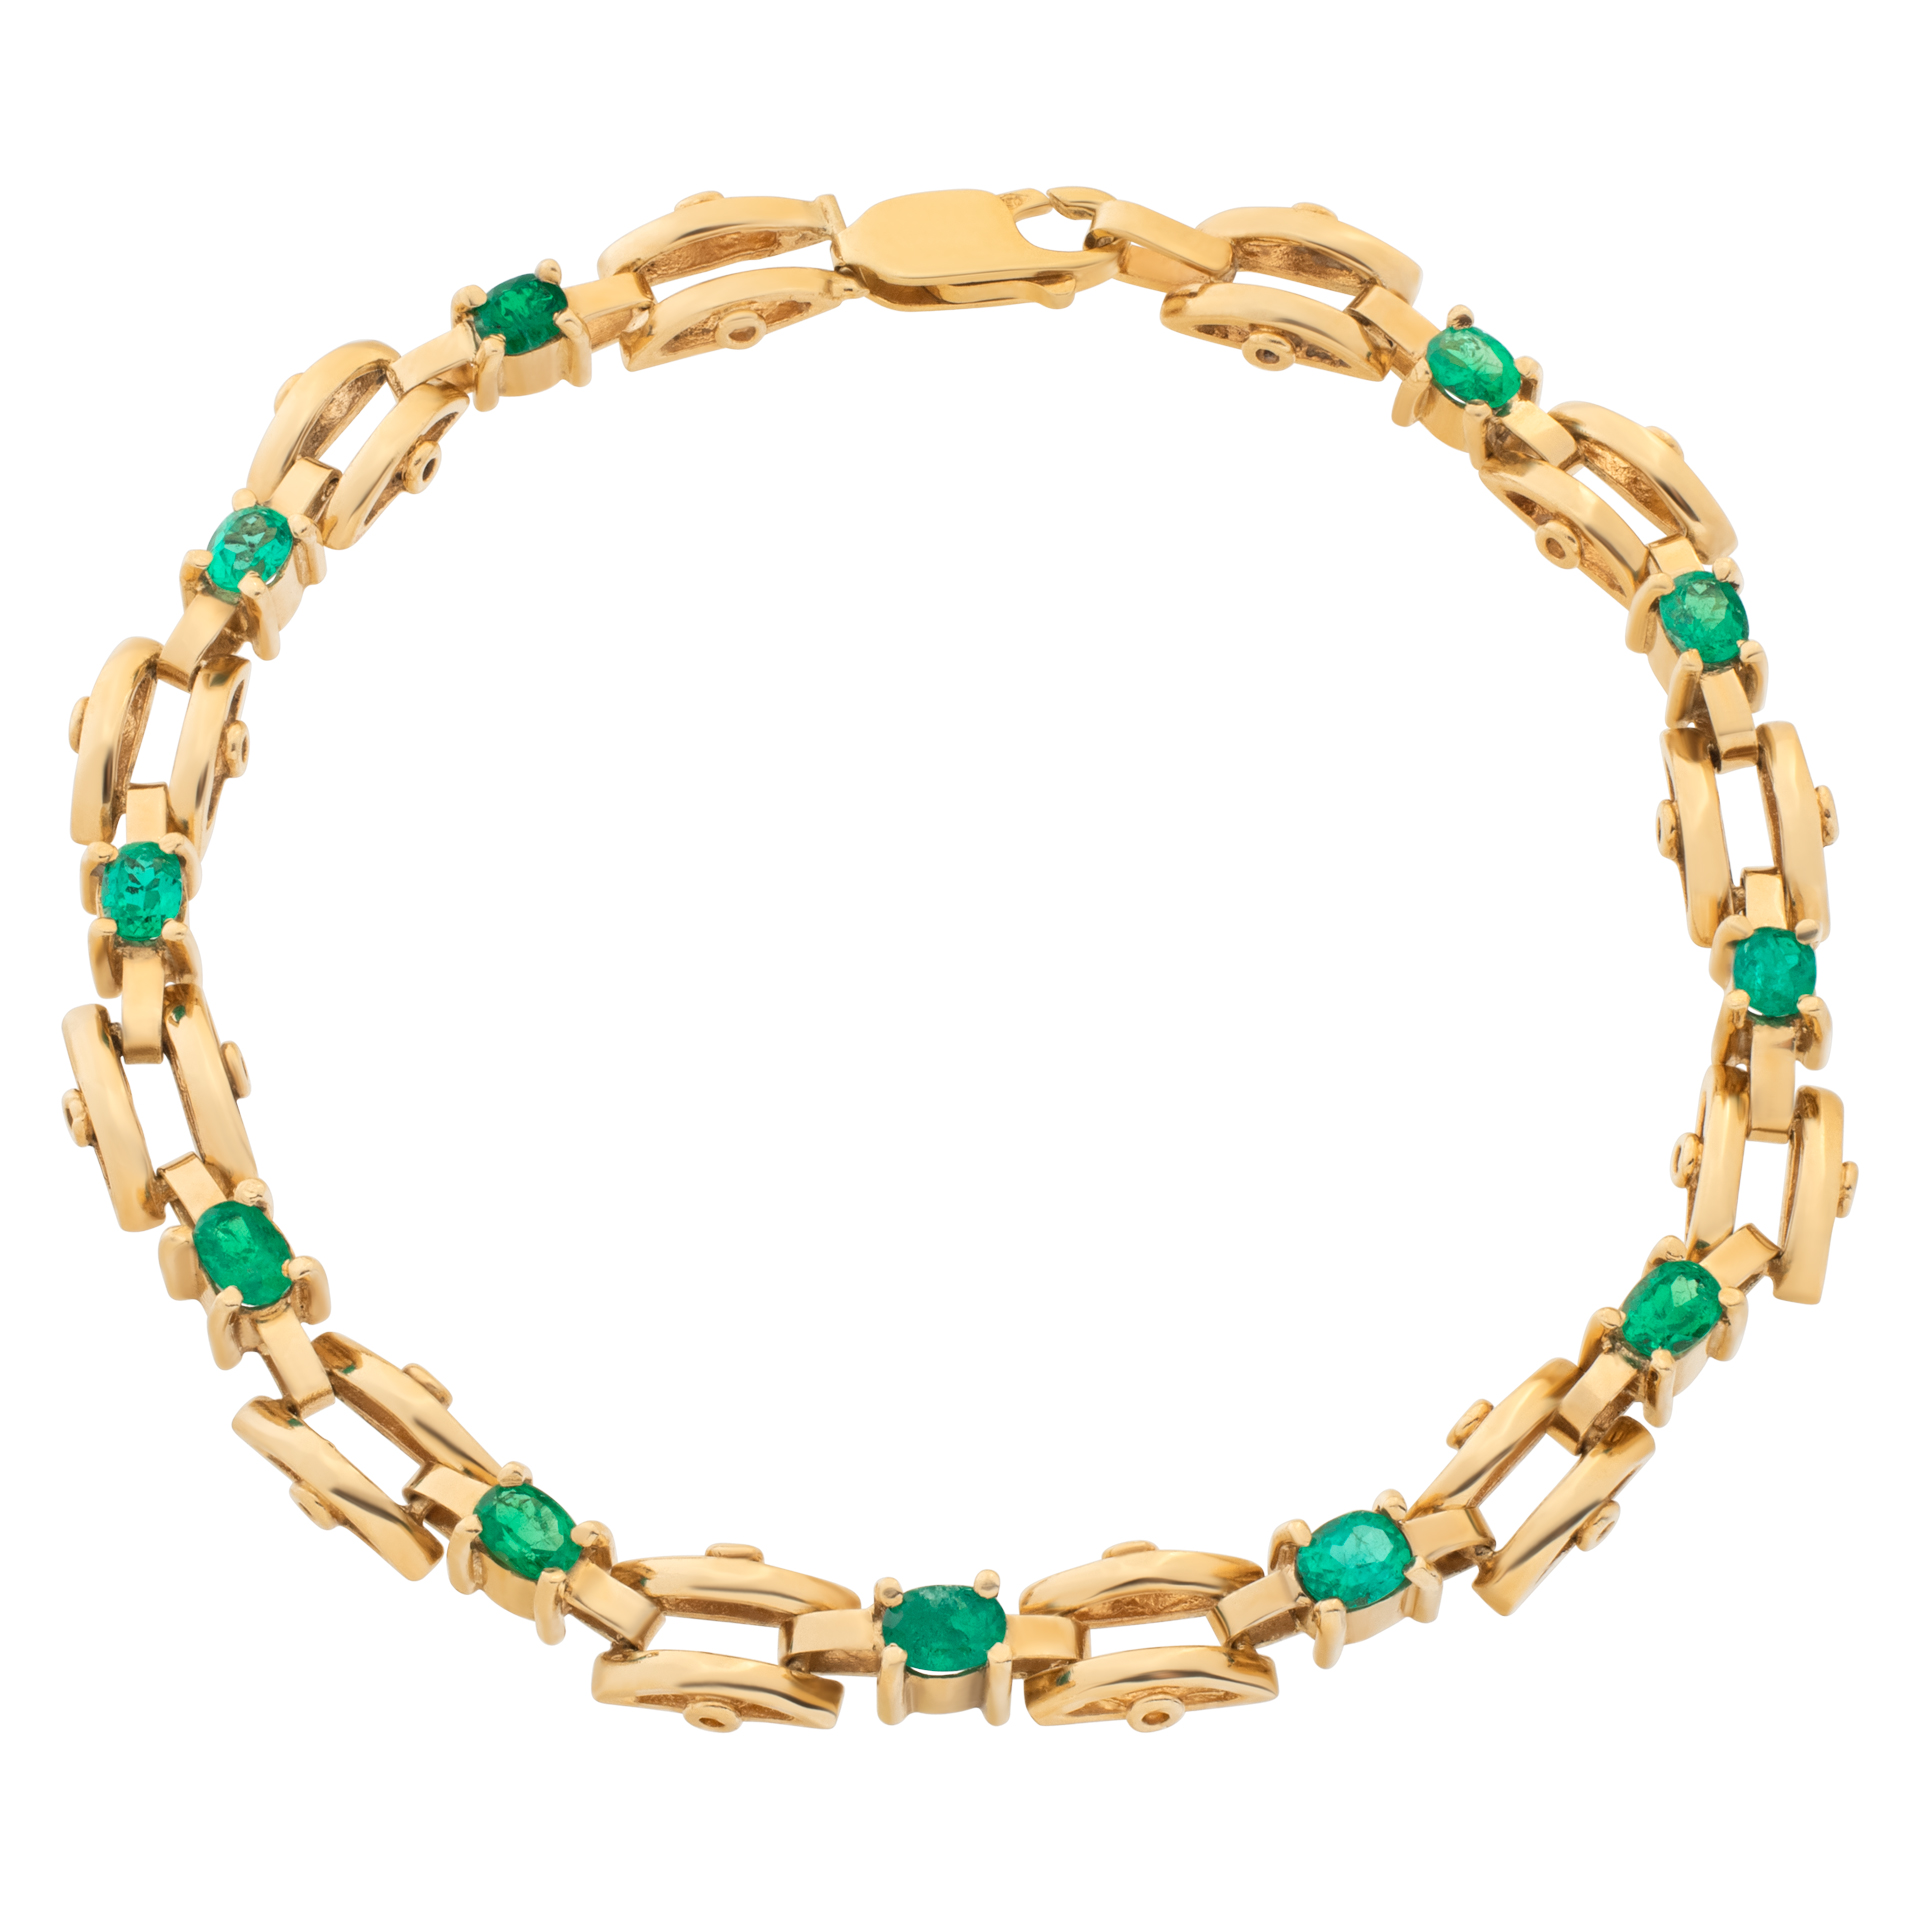 Beautiful 18k yellow gold bracelet with oval cut emeralds